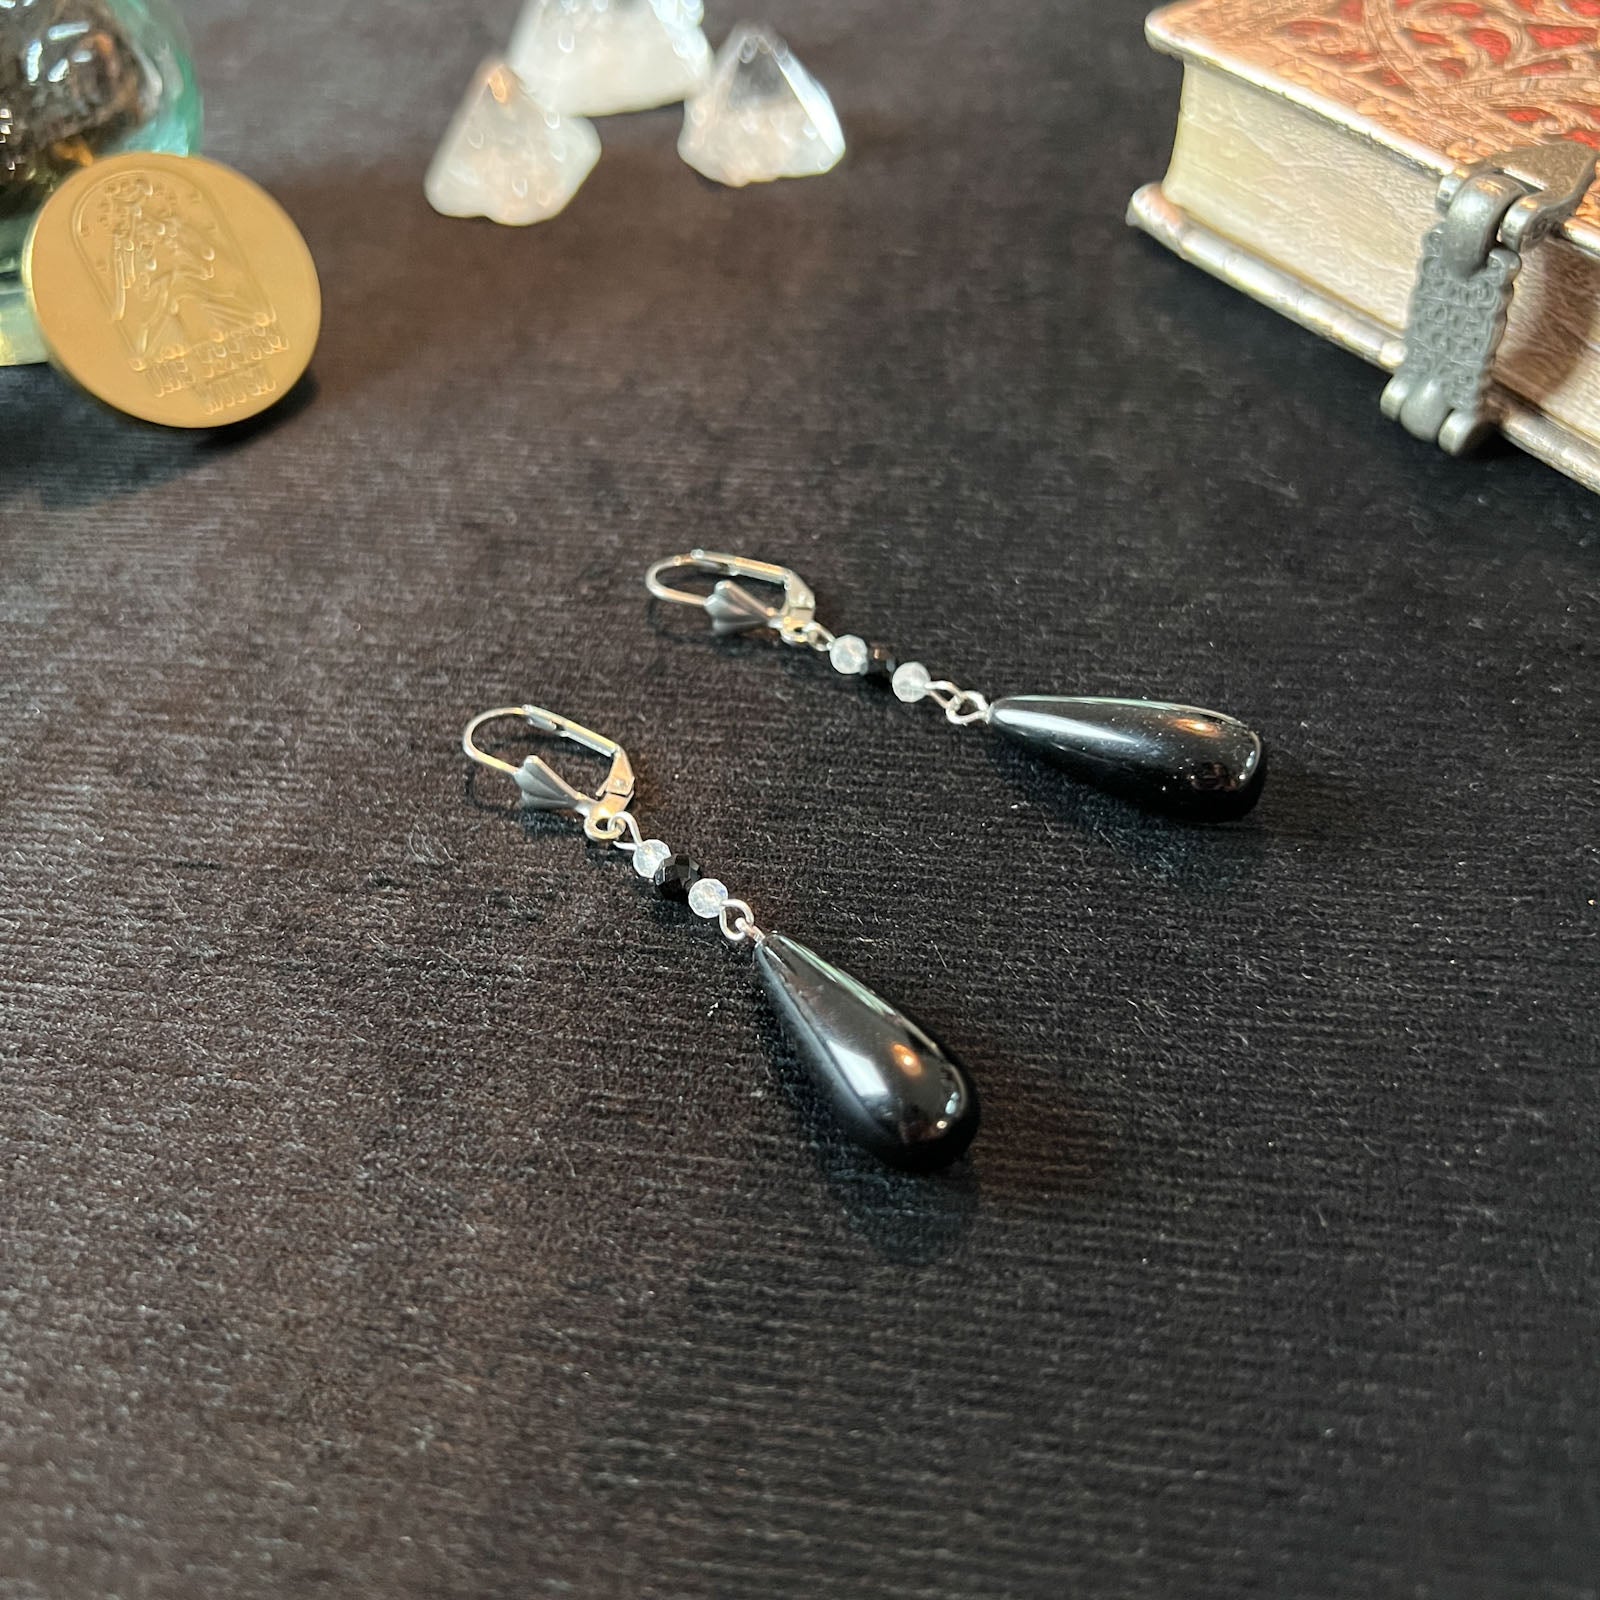 Obsidian, Moonstone and Onyx elegant dainty drop earrings Baguette Magick